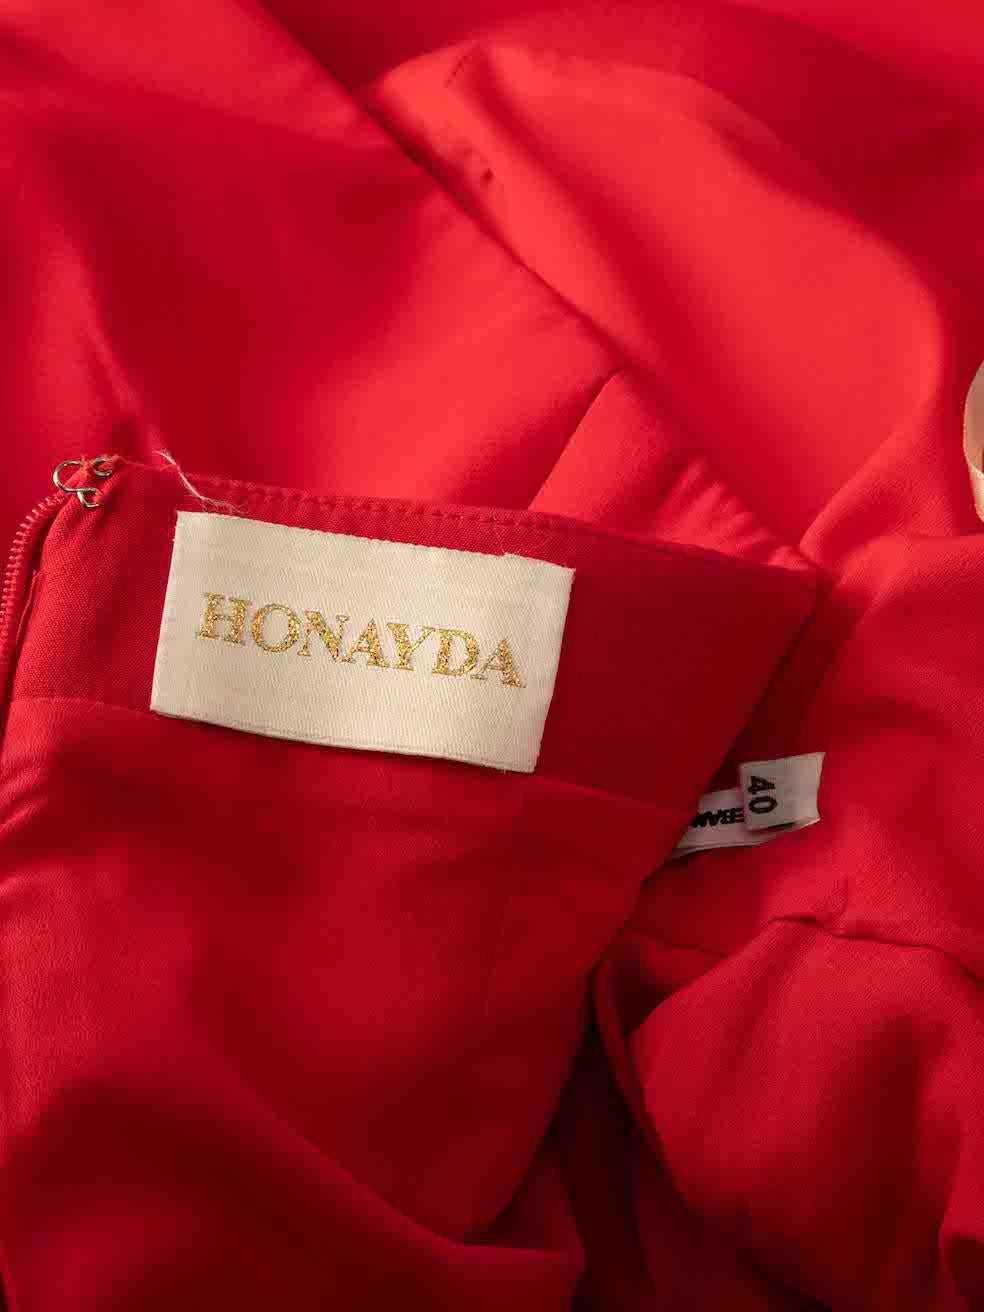 Honayda Red Tassel Strapless Mini Dress Size L For Sale 2